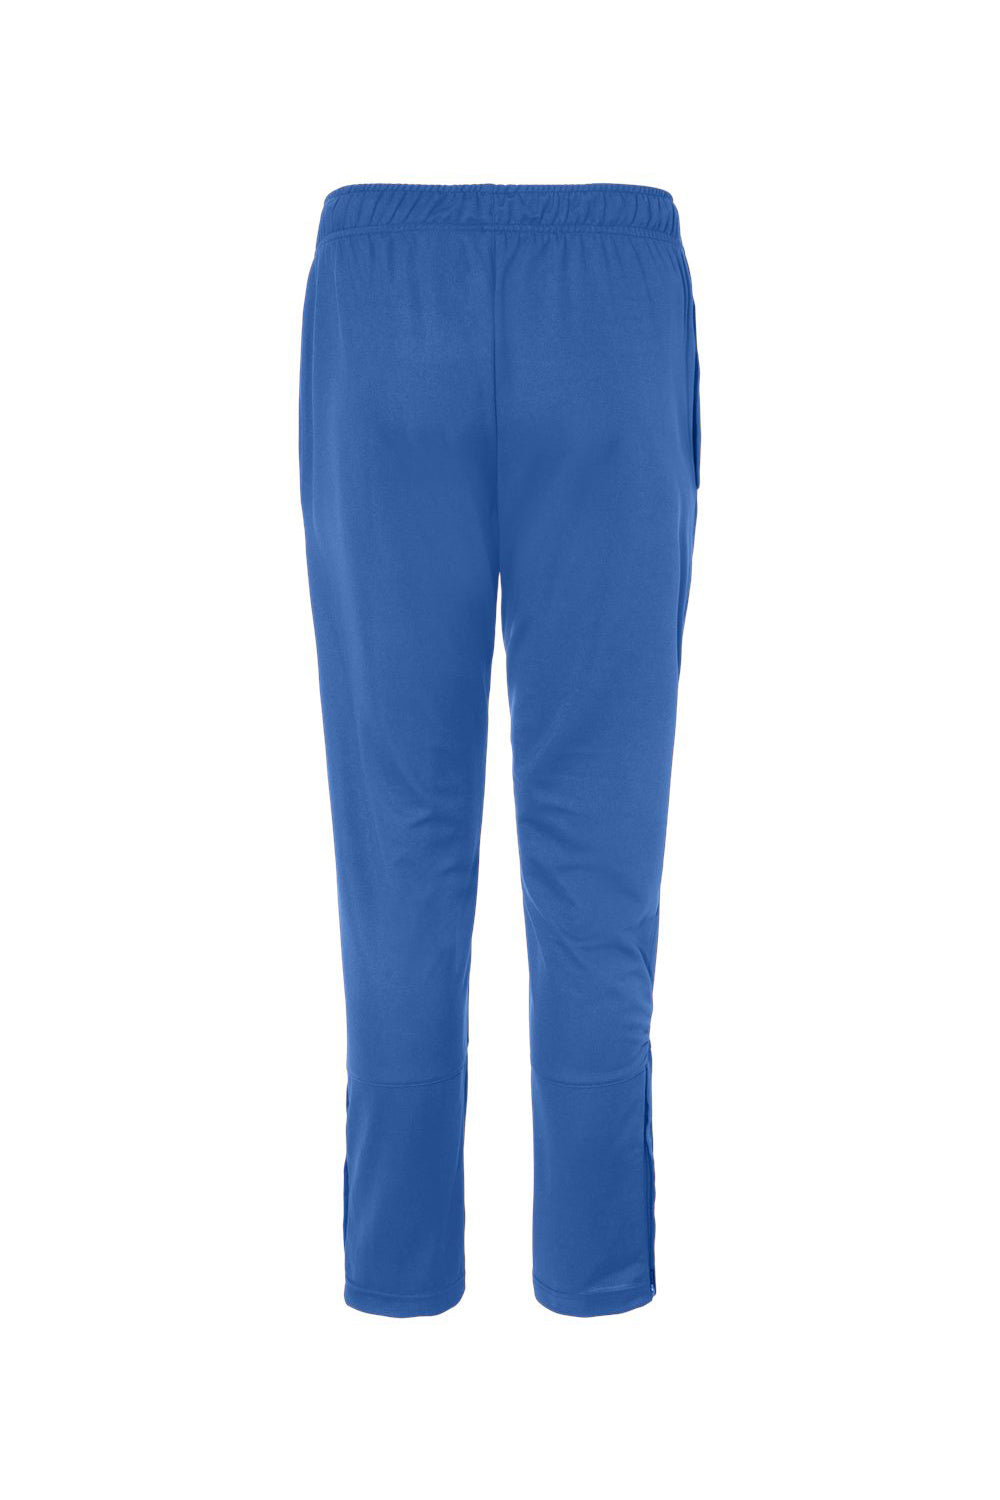 Badger 7724 Mens Athletic Pants w/ Pockets Royal Blue Flat Back